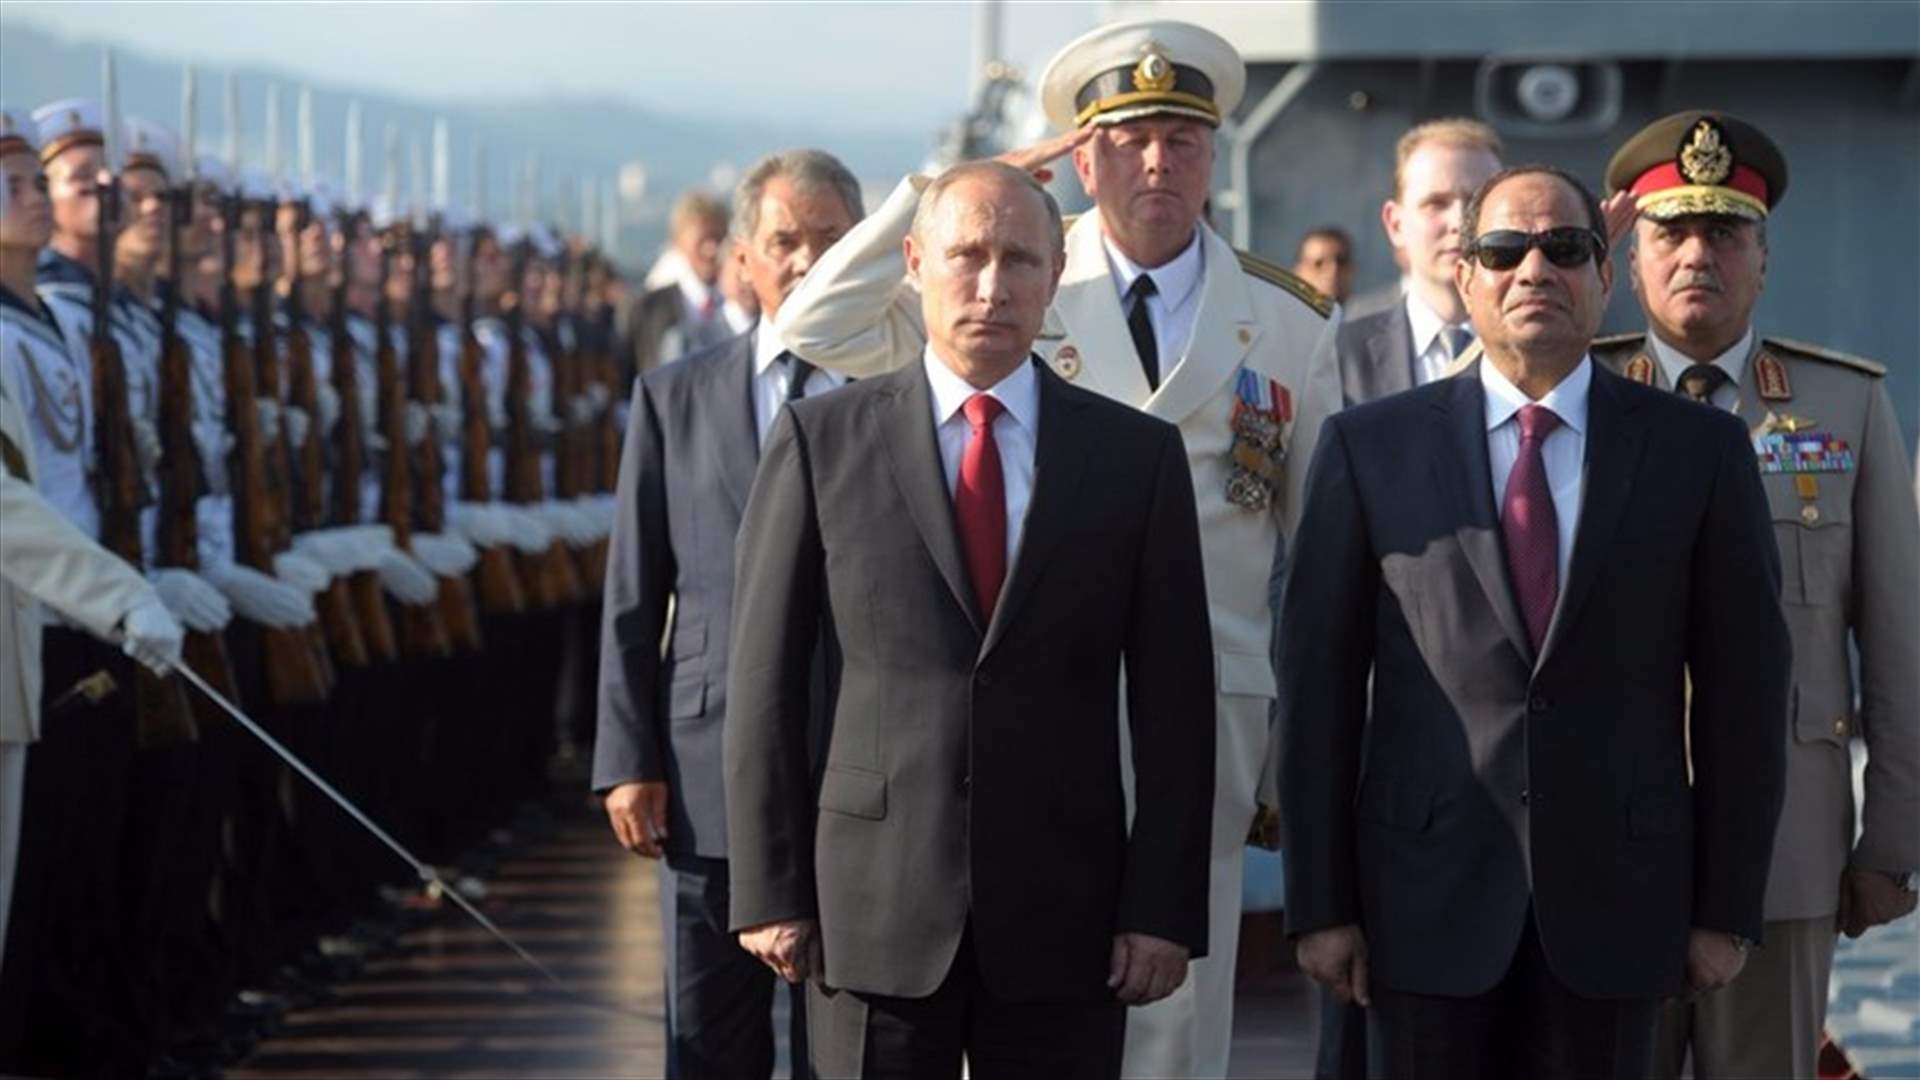 Russian flights to Egypt will resume soon, Putin tells Sisi